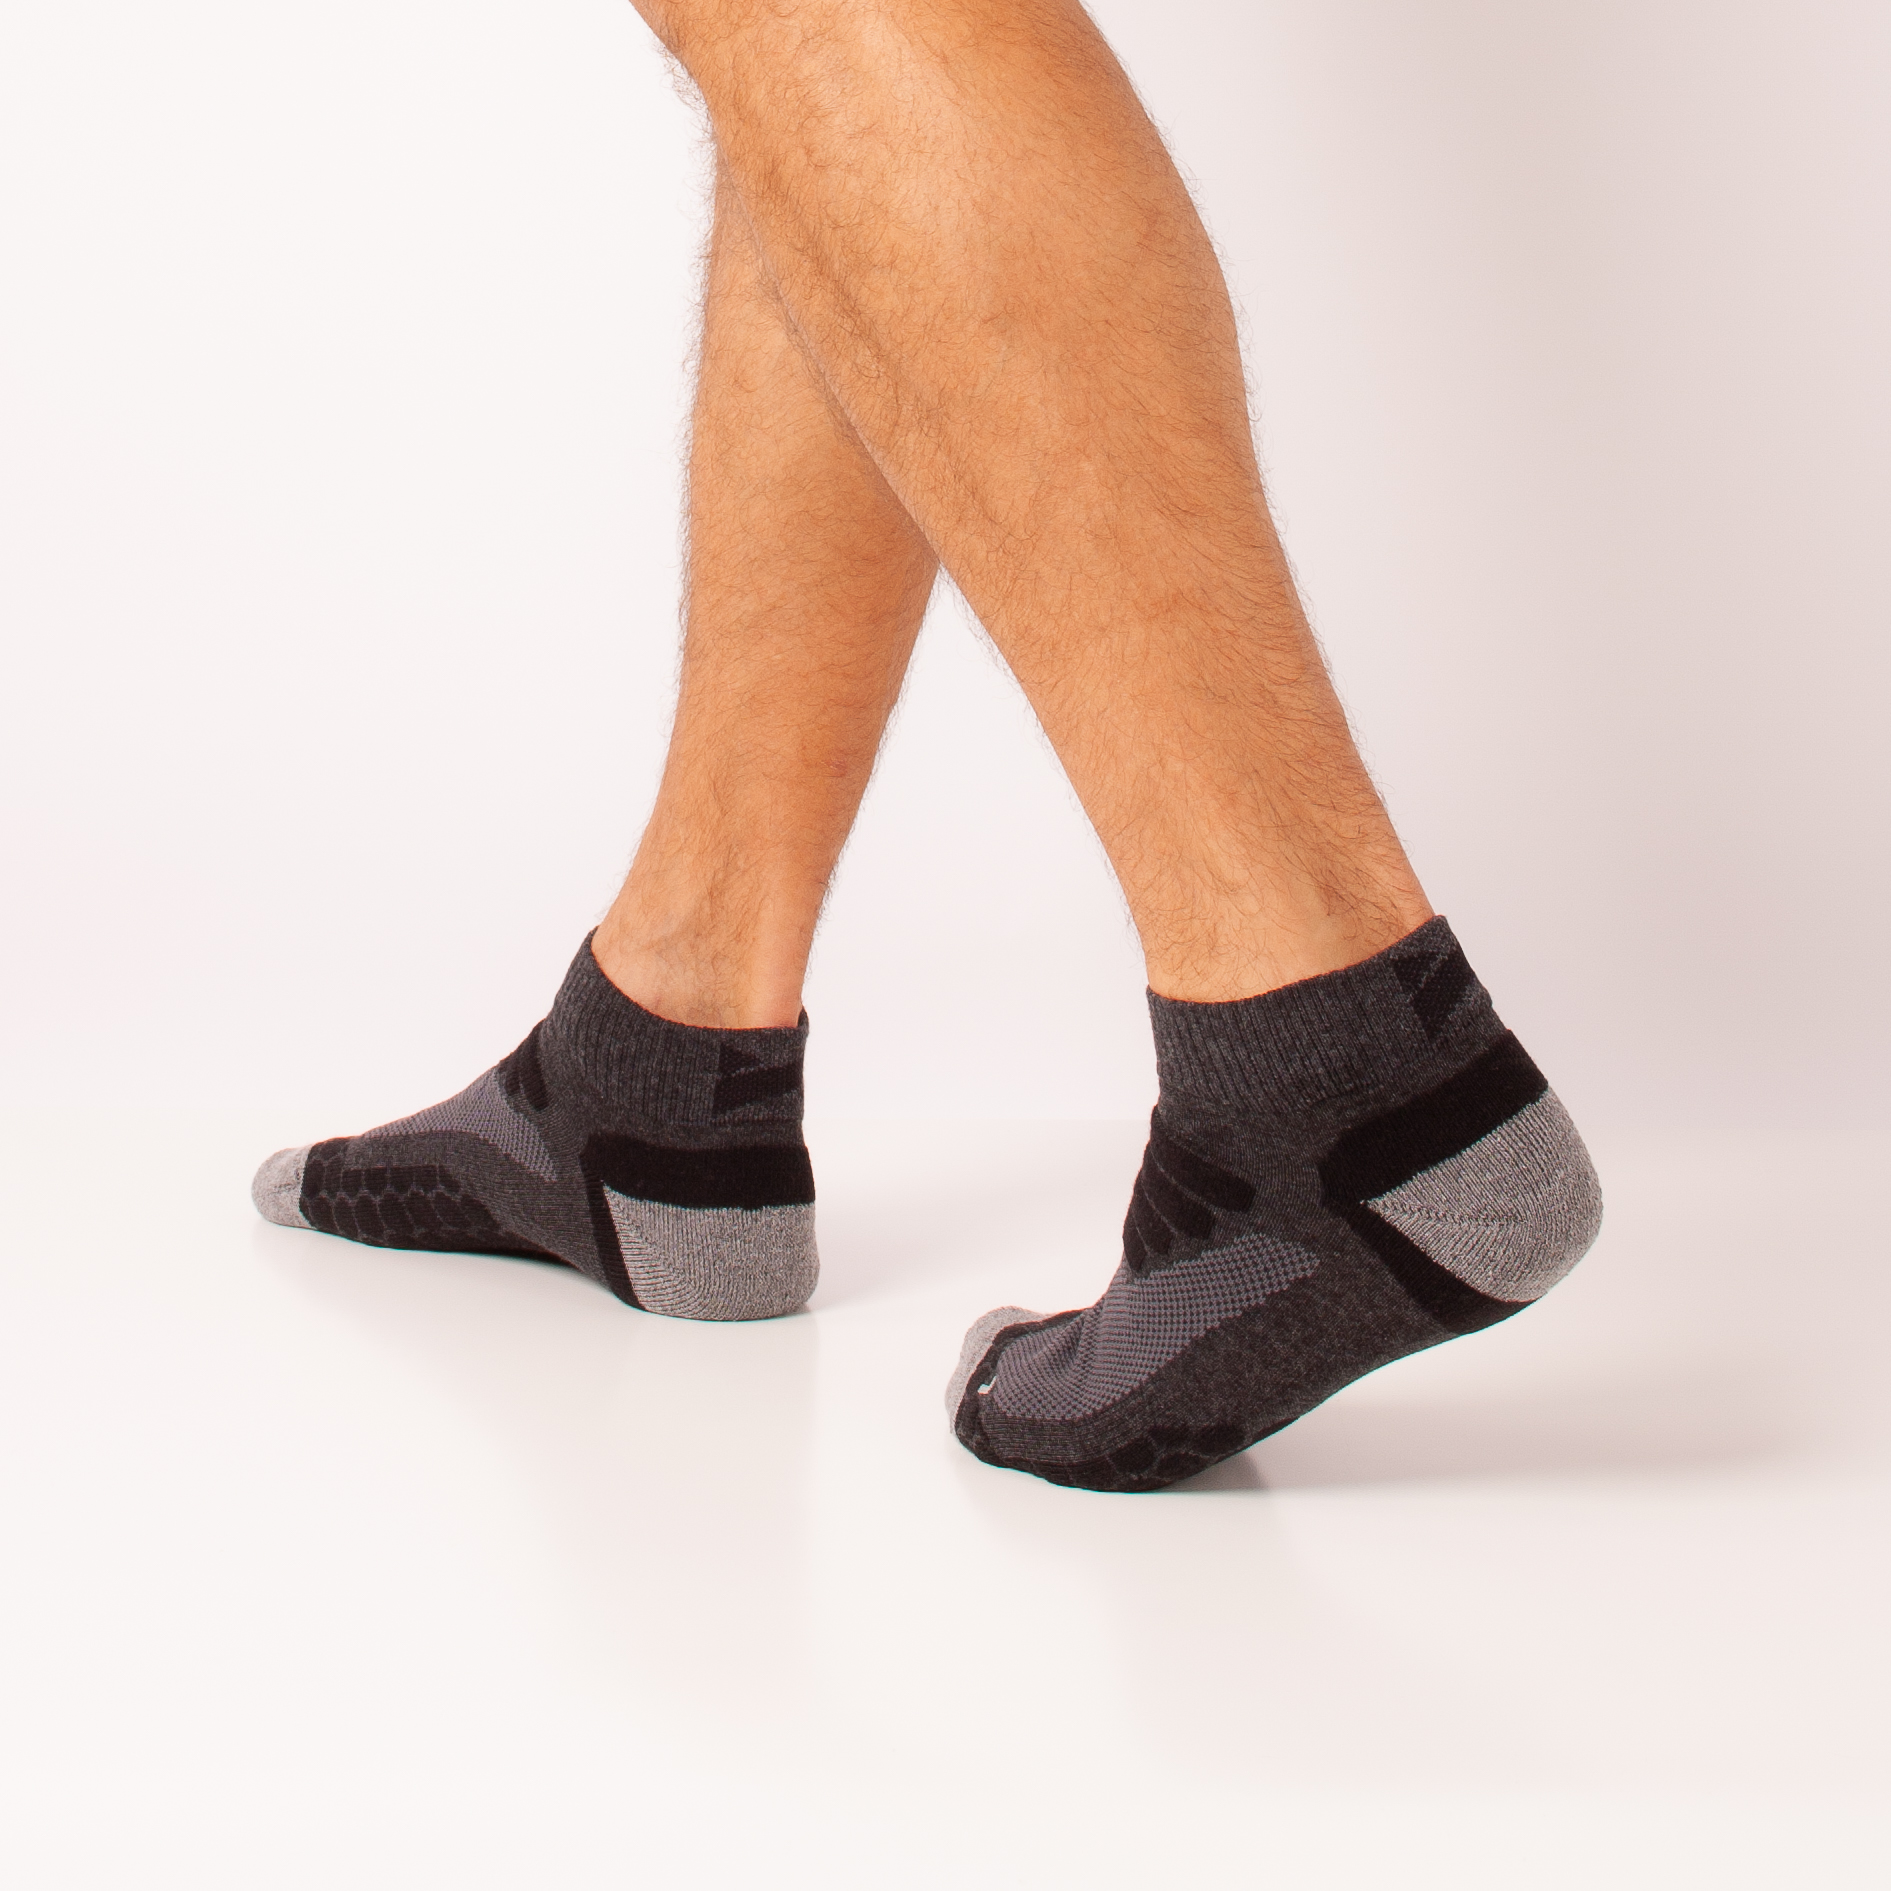 Calcetines Cortos Xtreme Sockswear - Gris - Pack 2 Pares  MKP